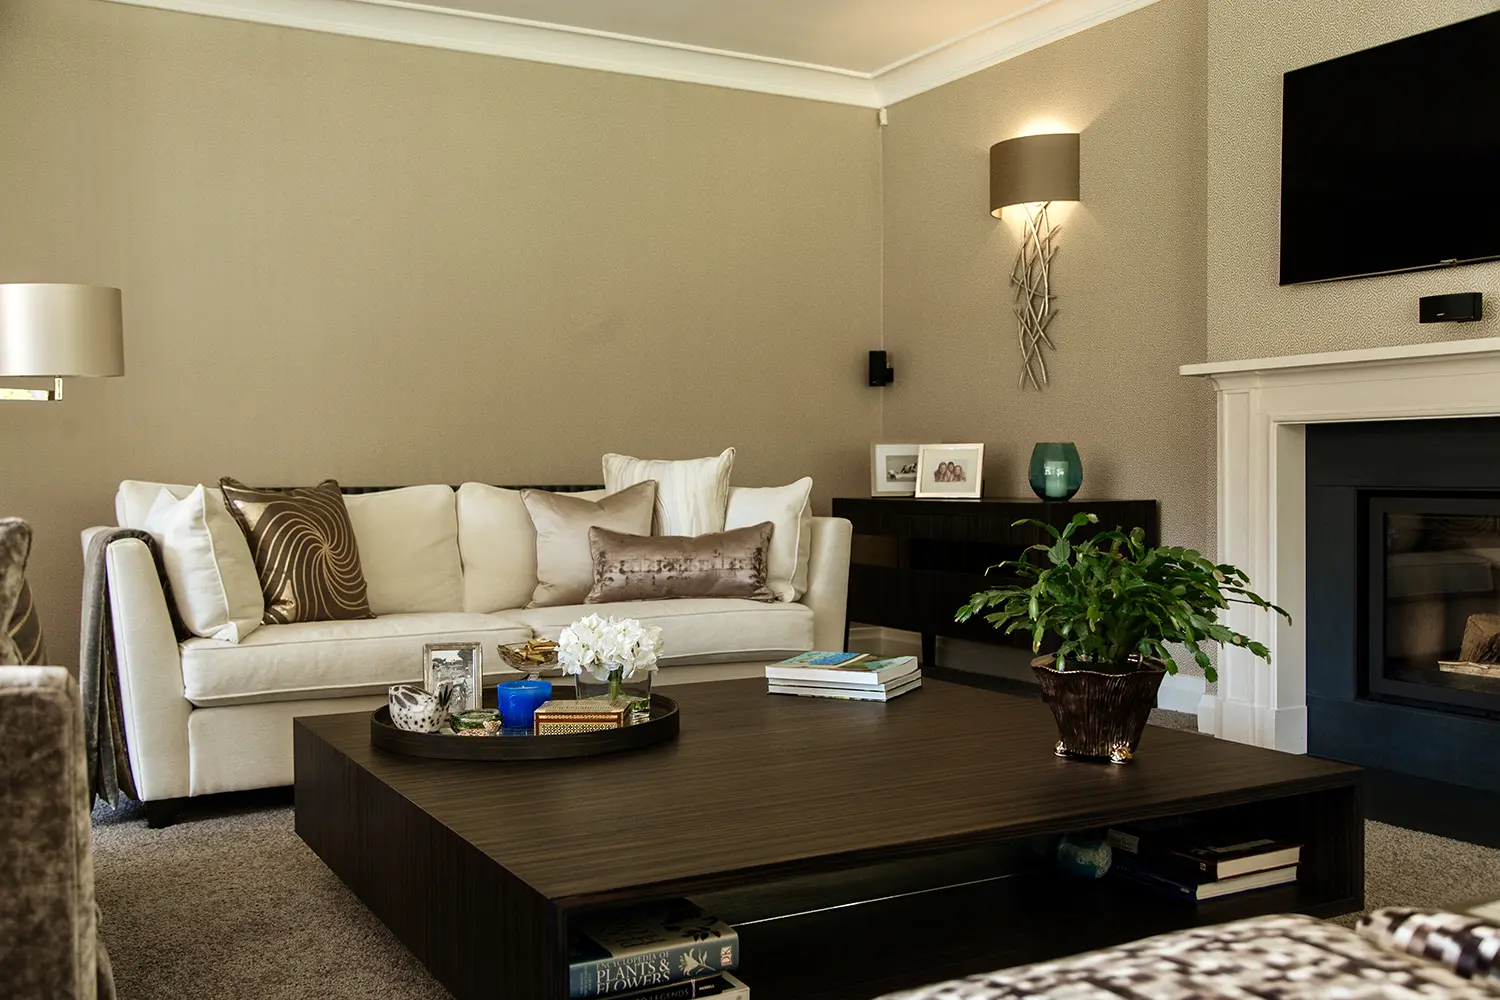 Hunters Lodge Living Room & Orangery interior design